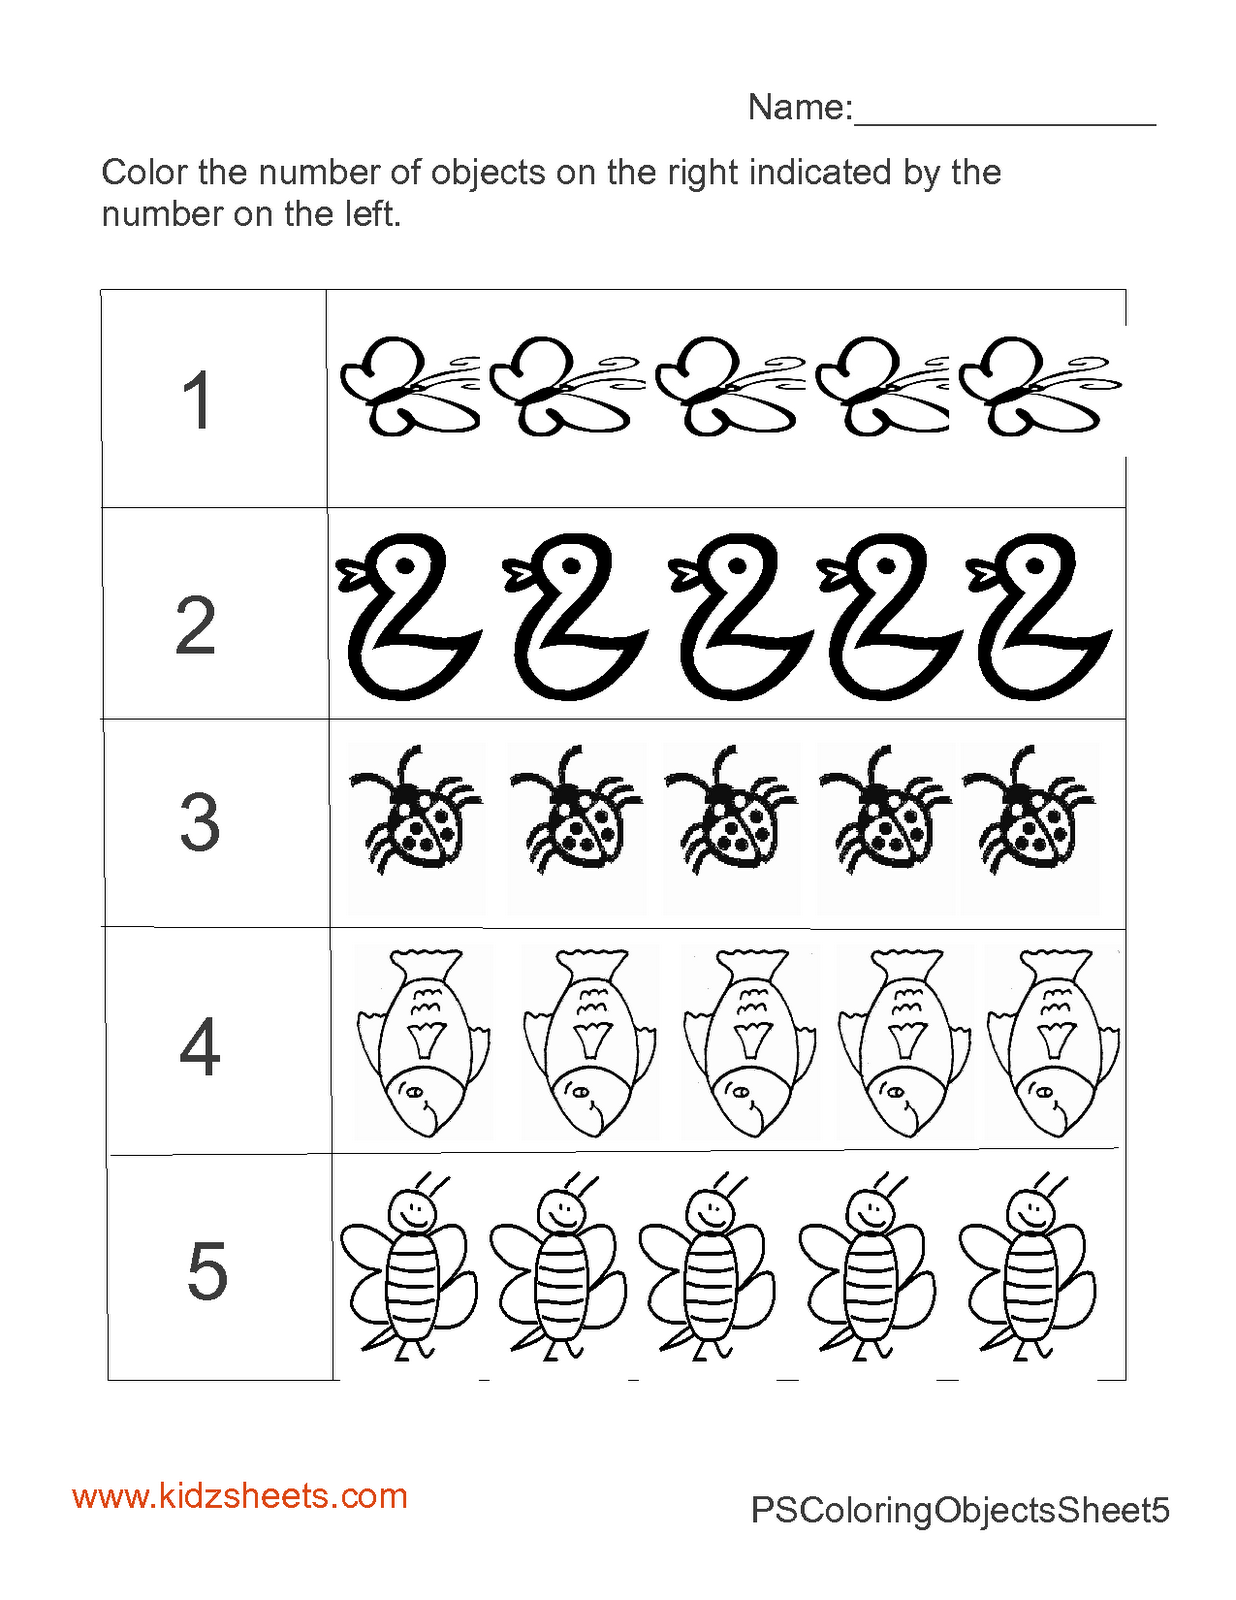  kindergarten worksheets | Preschool worksheets | Printables for kids | #63